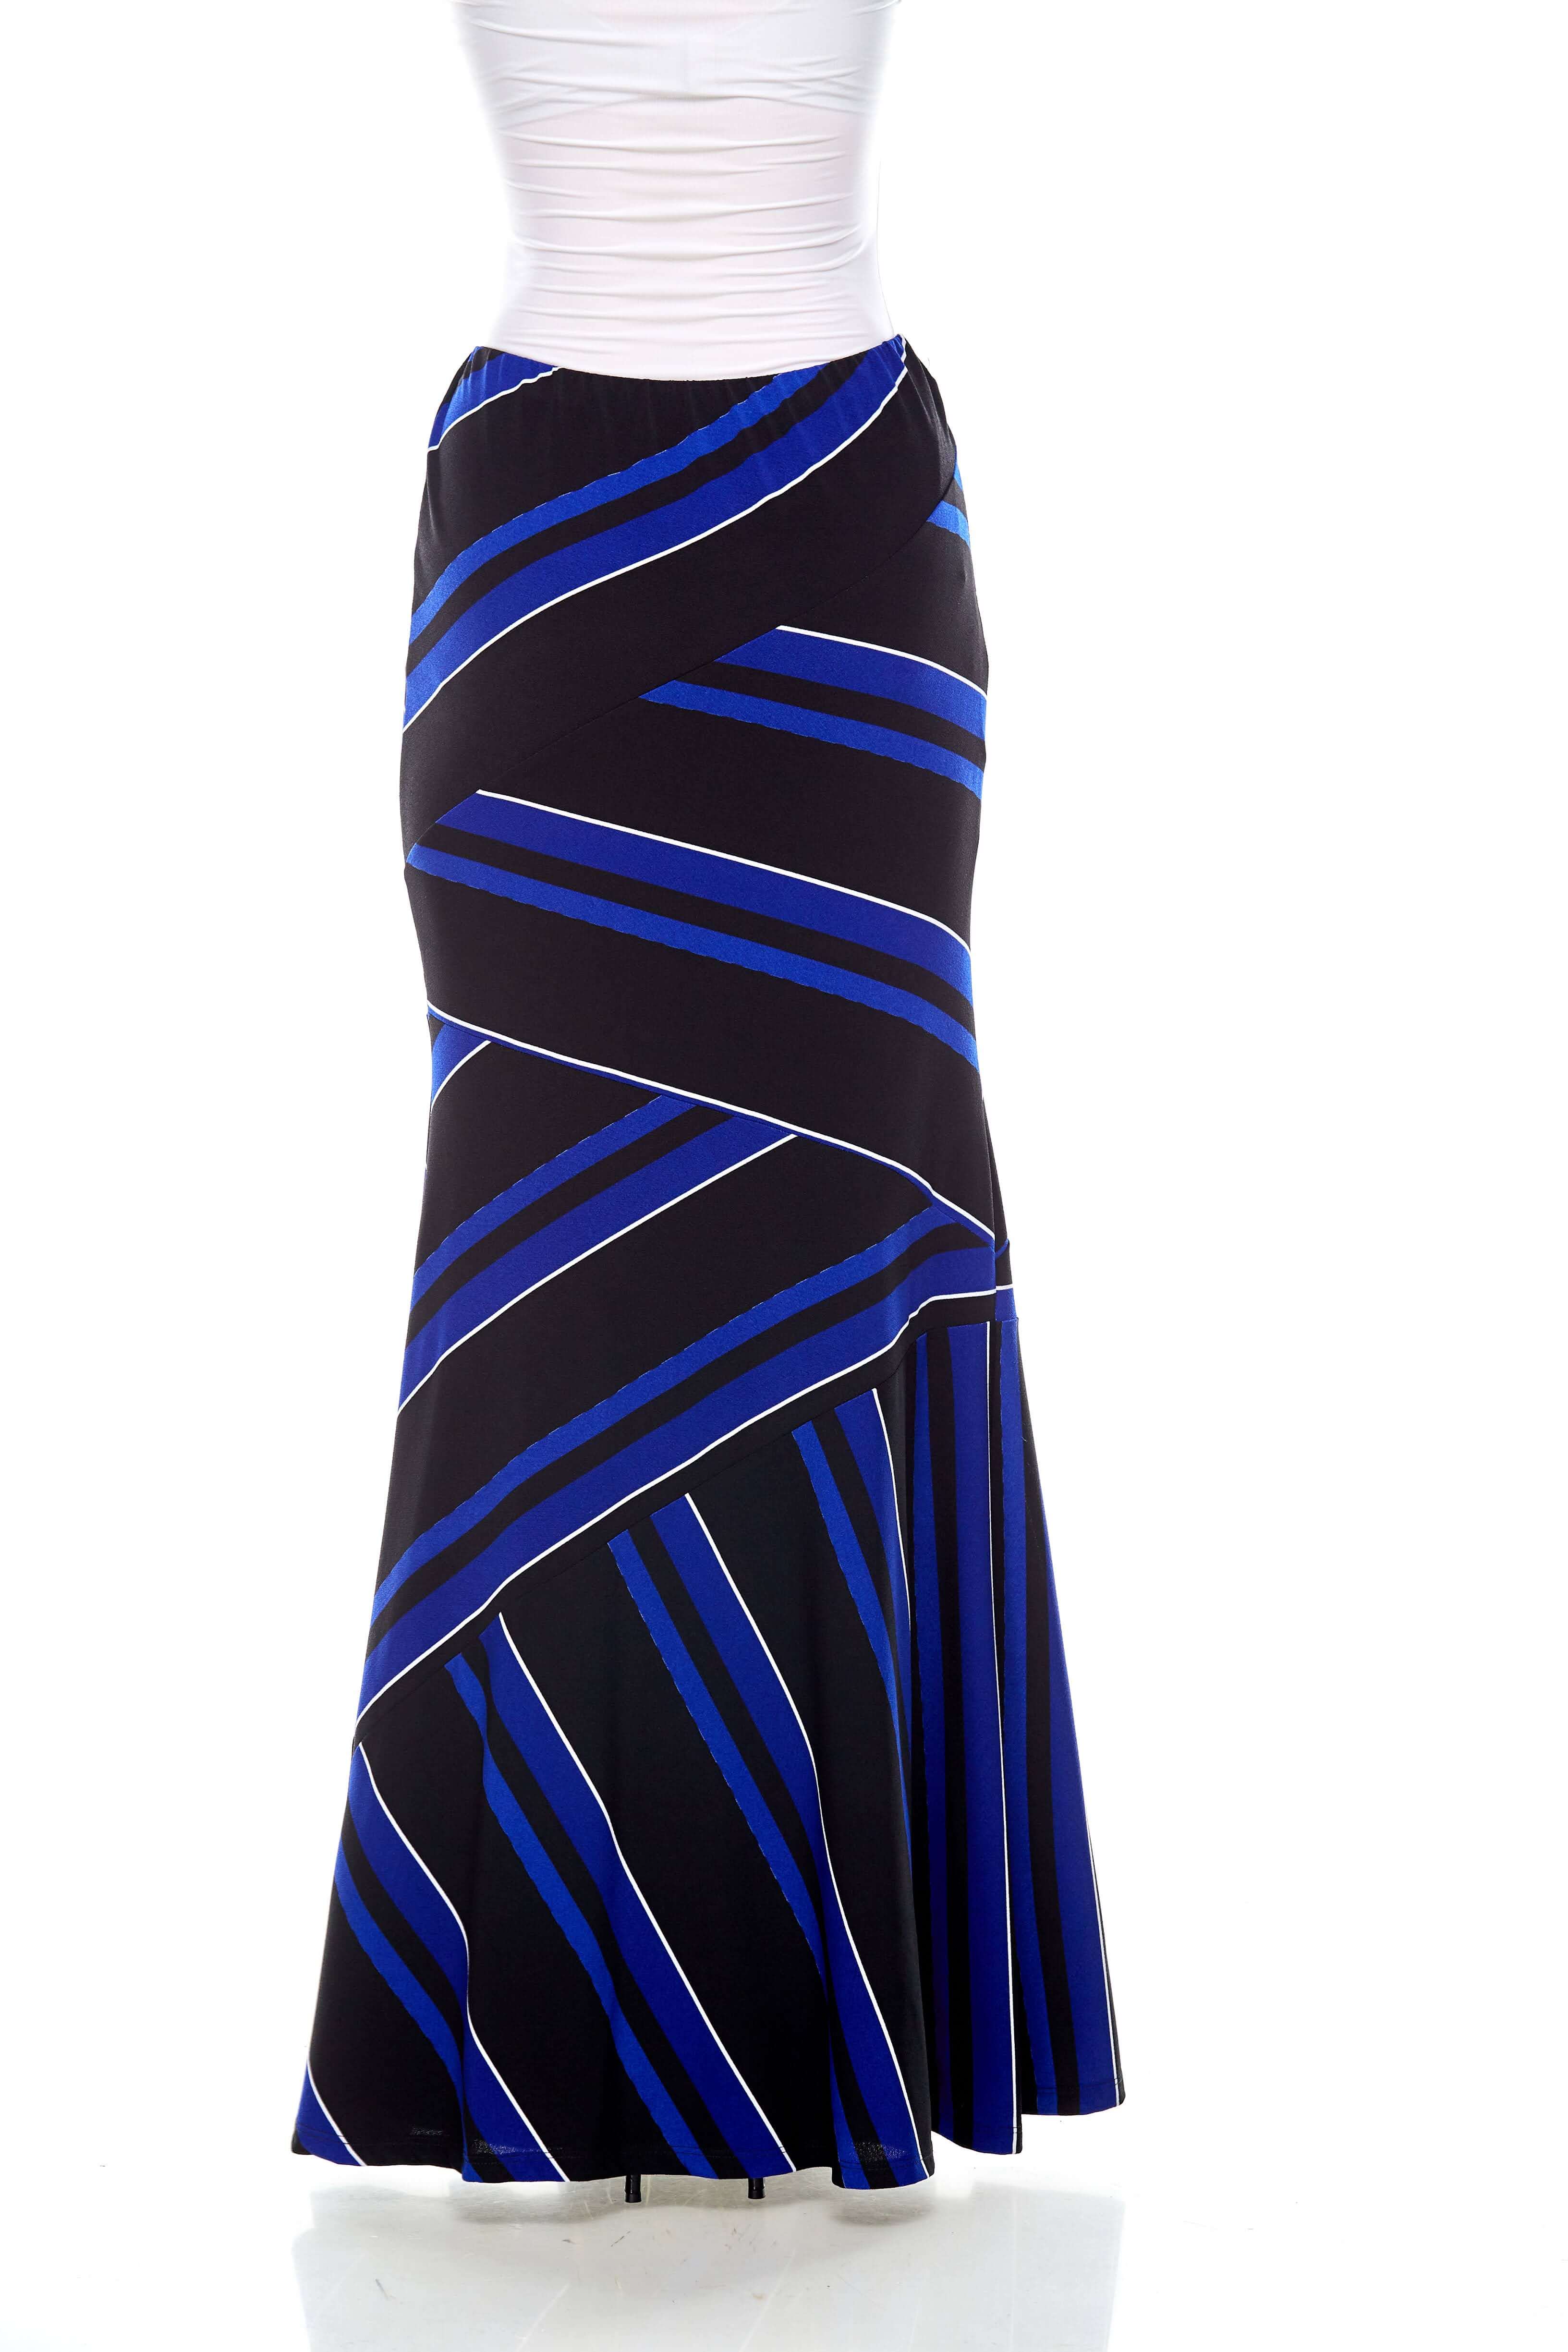 Blue-Black Striped Mermaid Skirt (6)